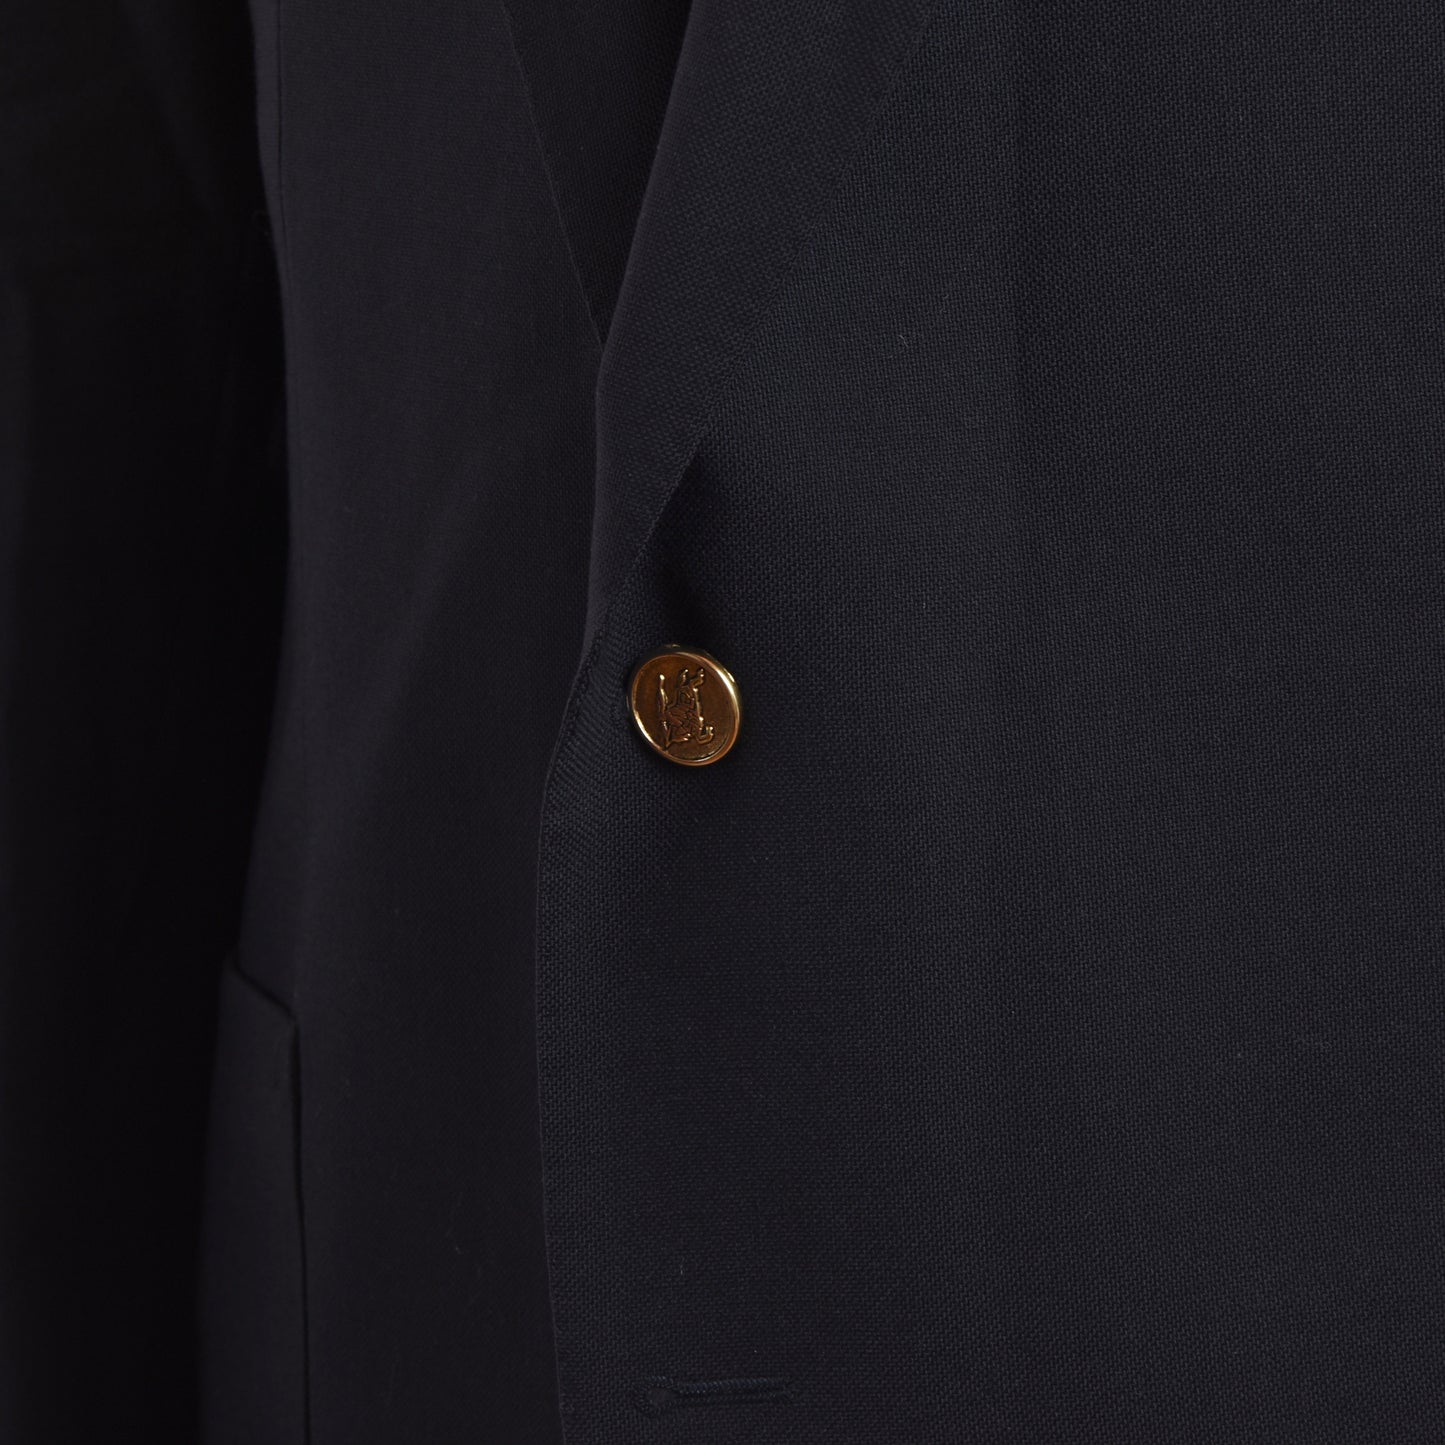 Burberrys Gold-Button Blazer Size 27 - Navy